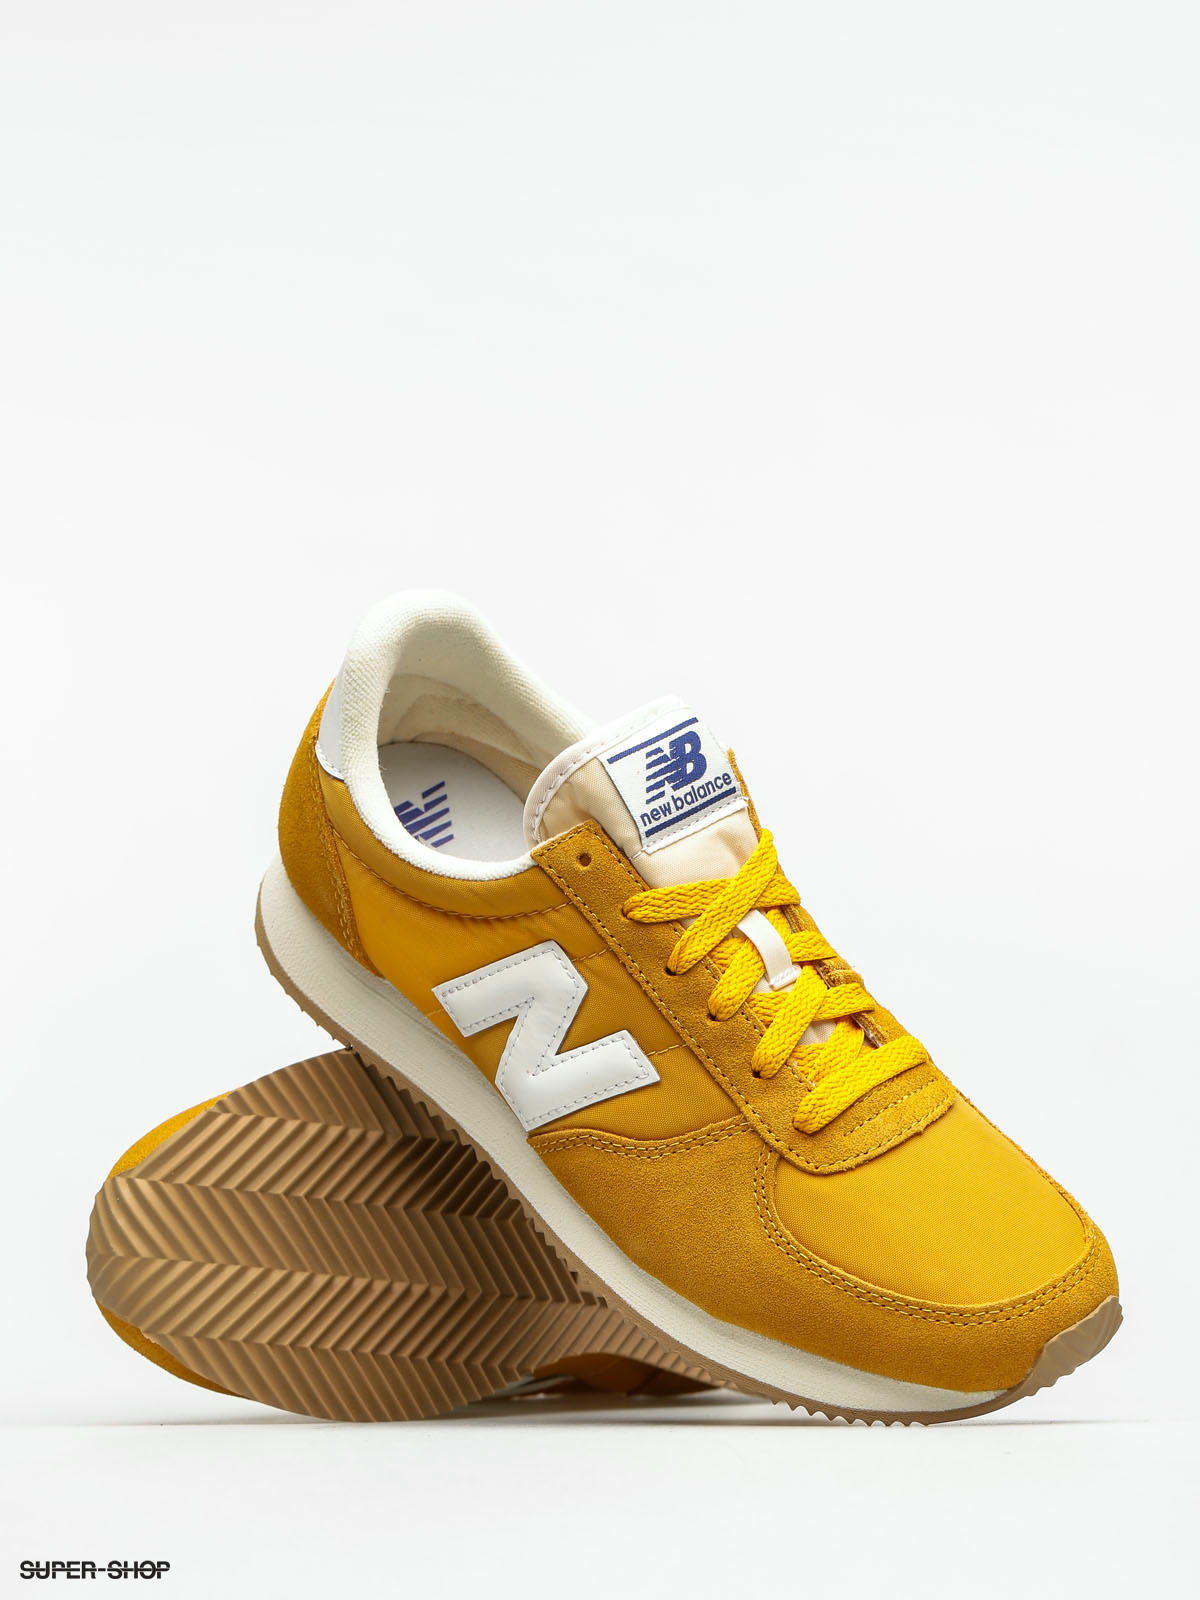 New Balance Shoes 220 (yellow)